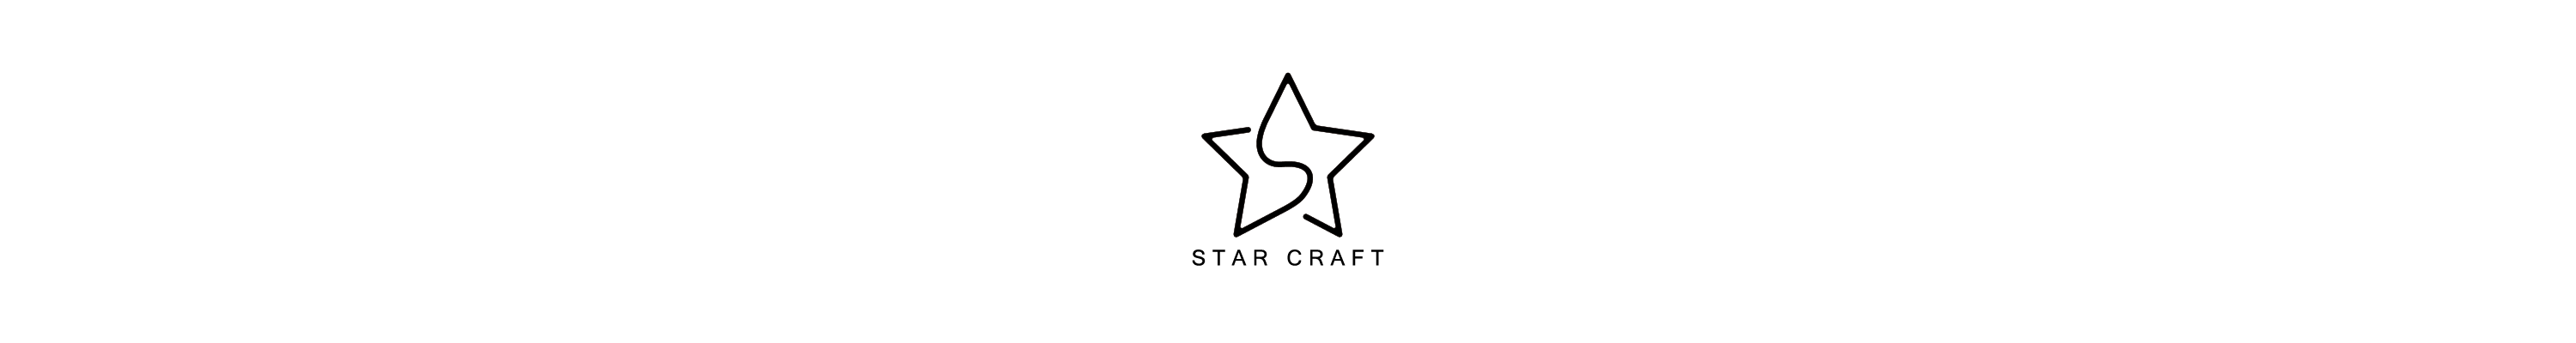 STAR CRAFT